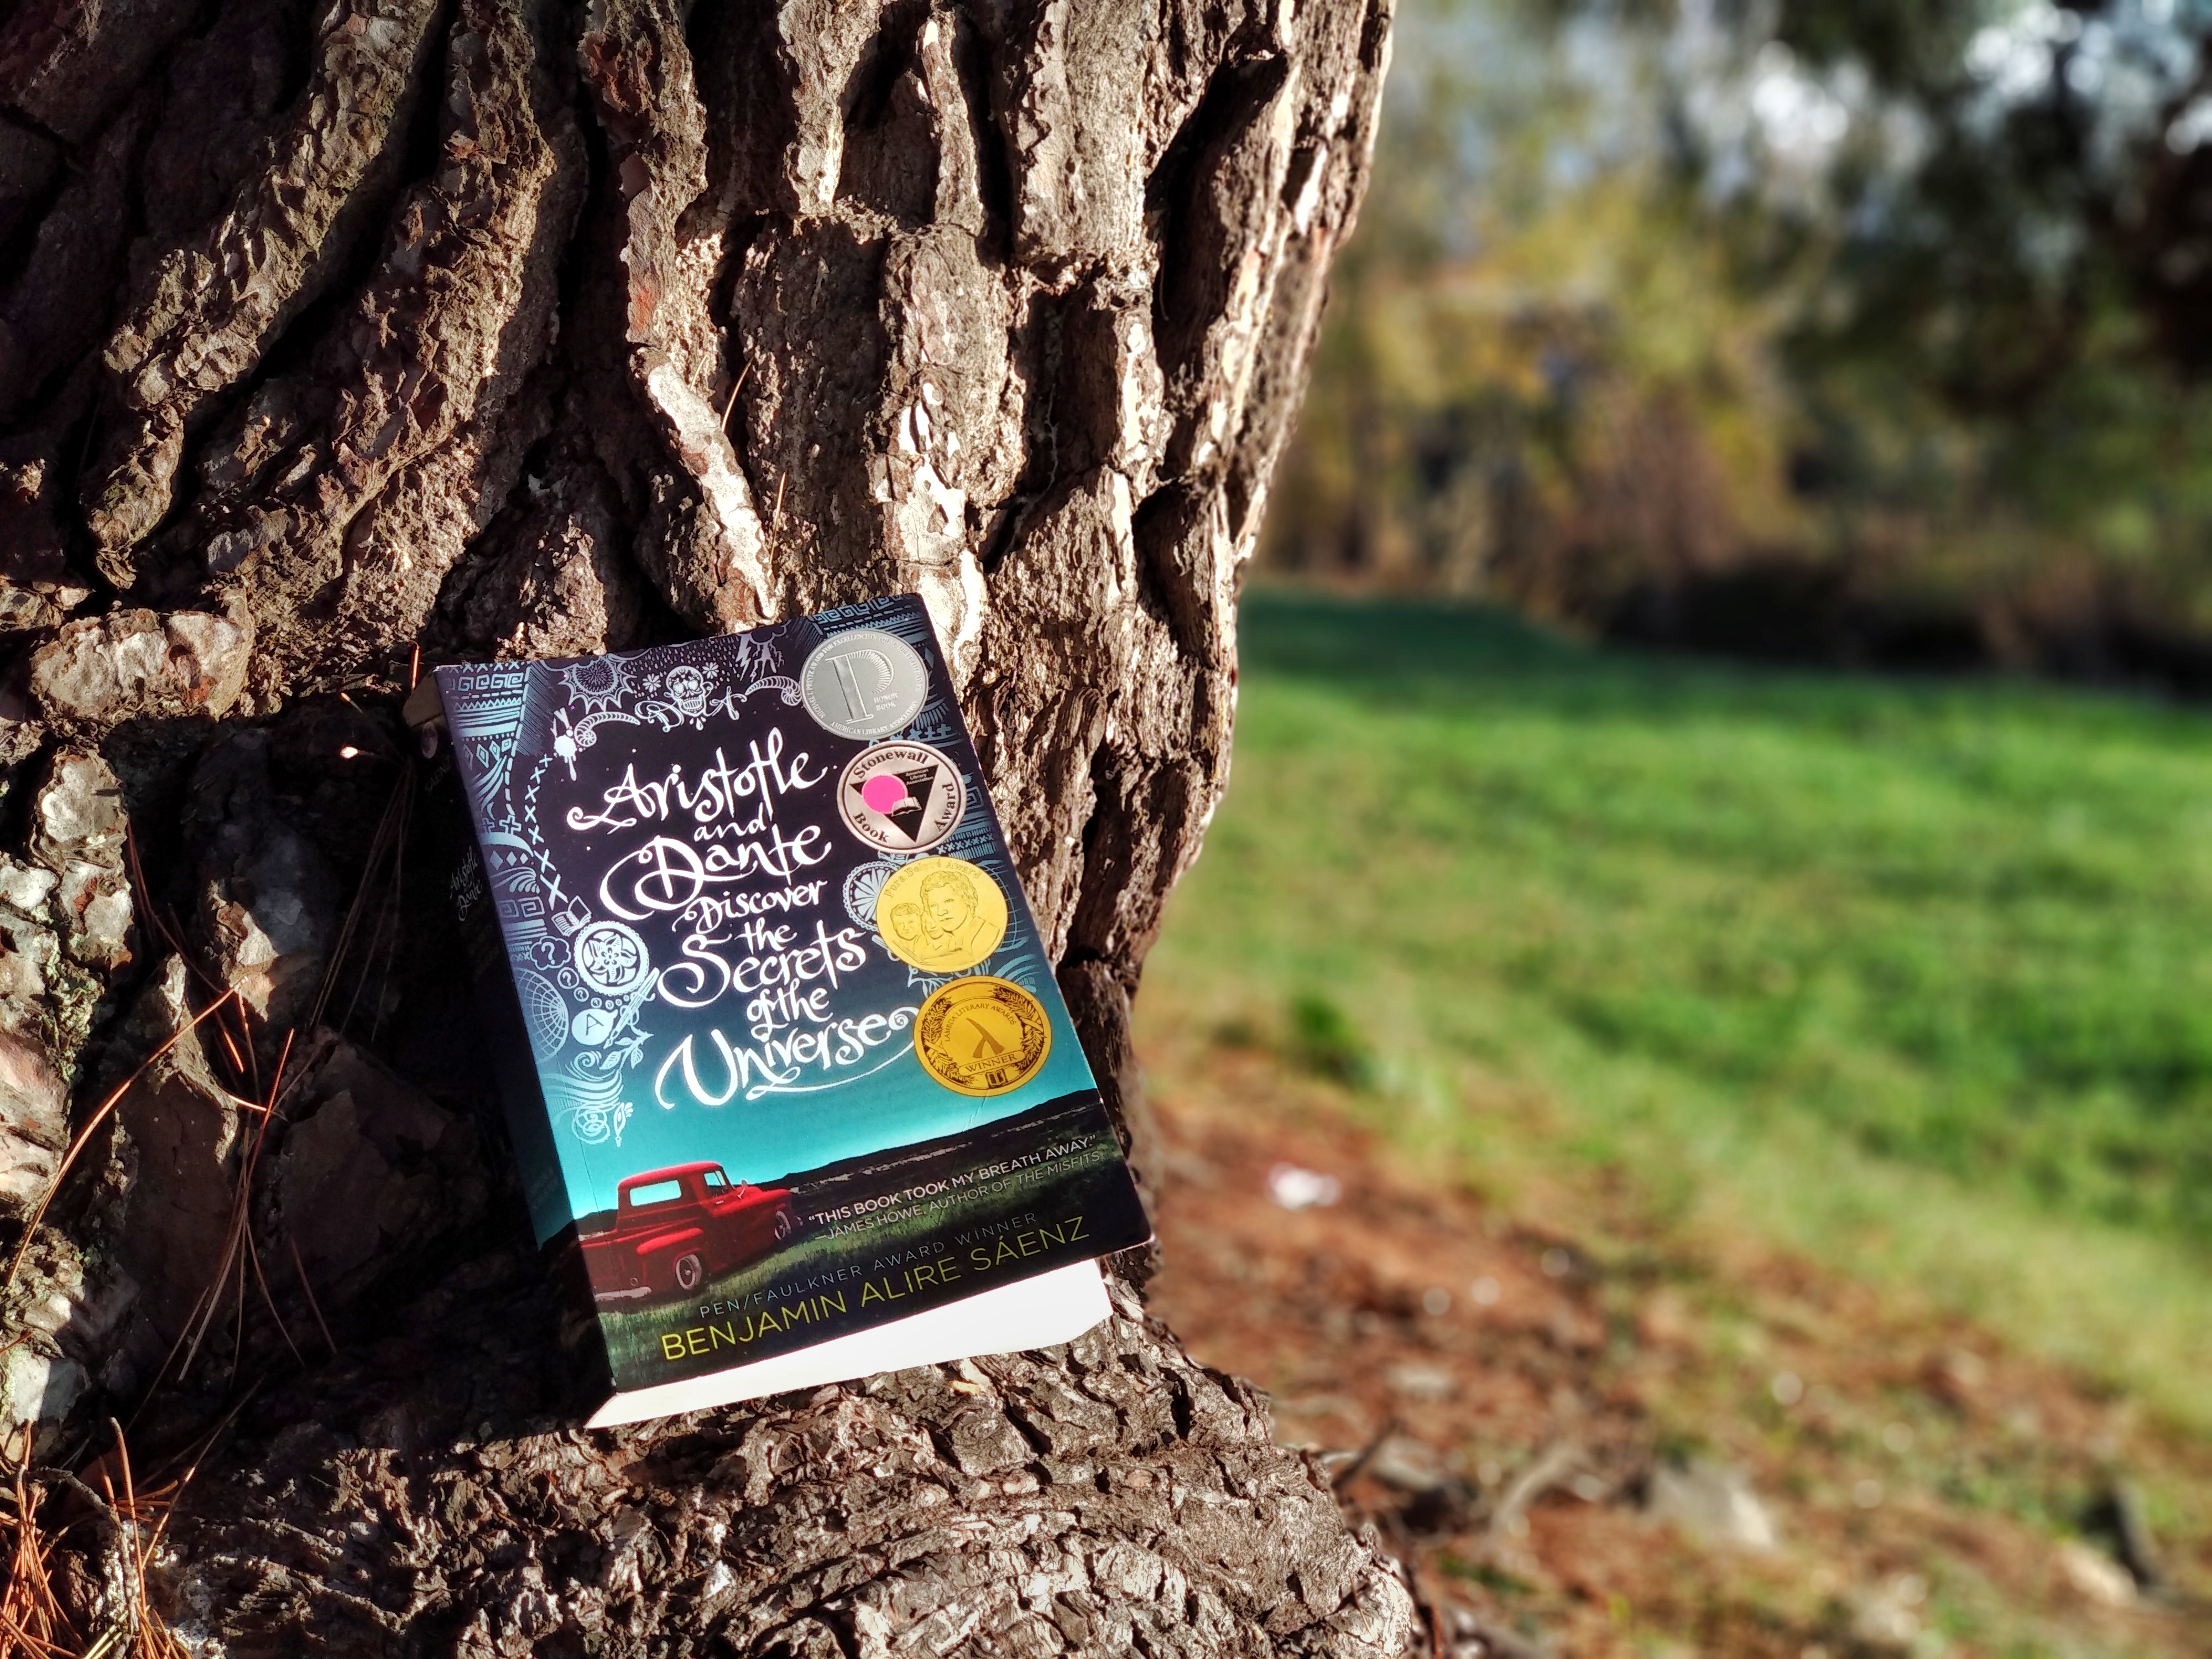 the book near a tree